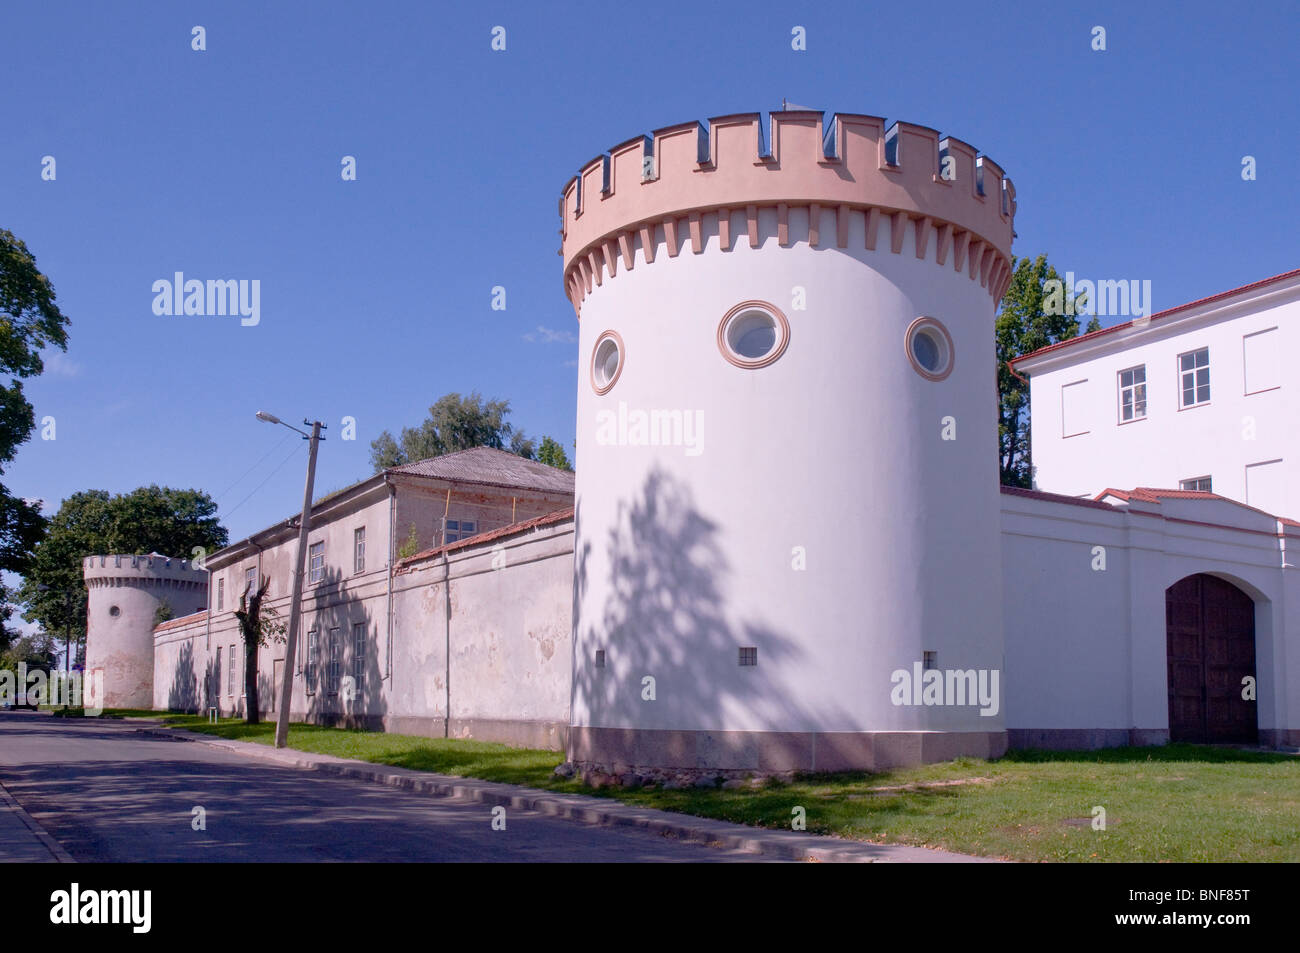 Zamek Taurogi na Litwie, Taurogi Castle Lithuania Stock Photo